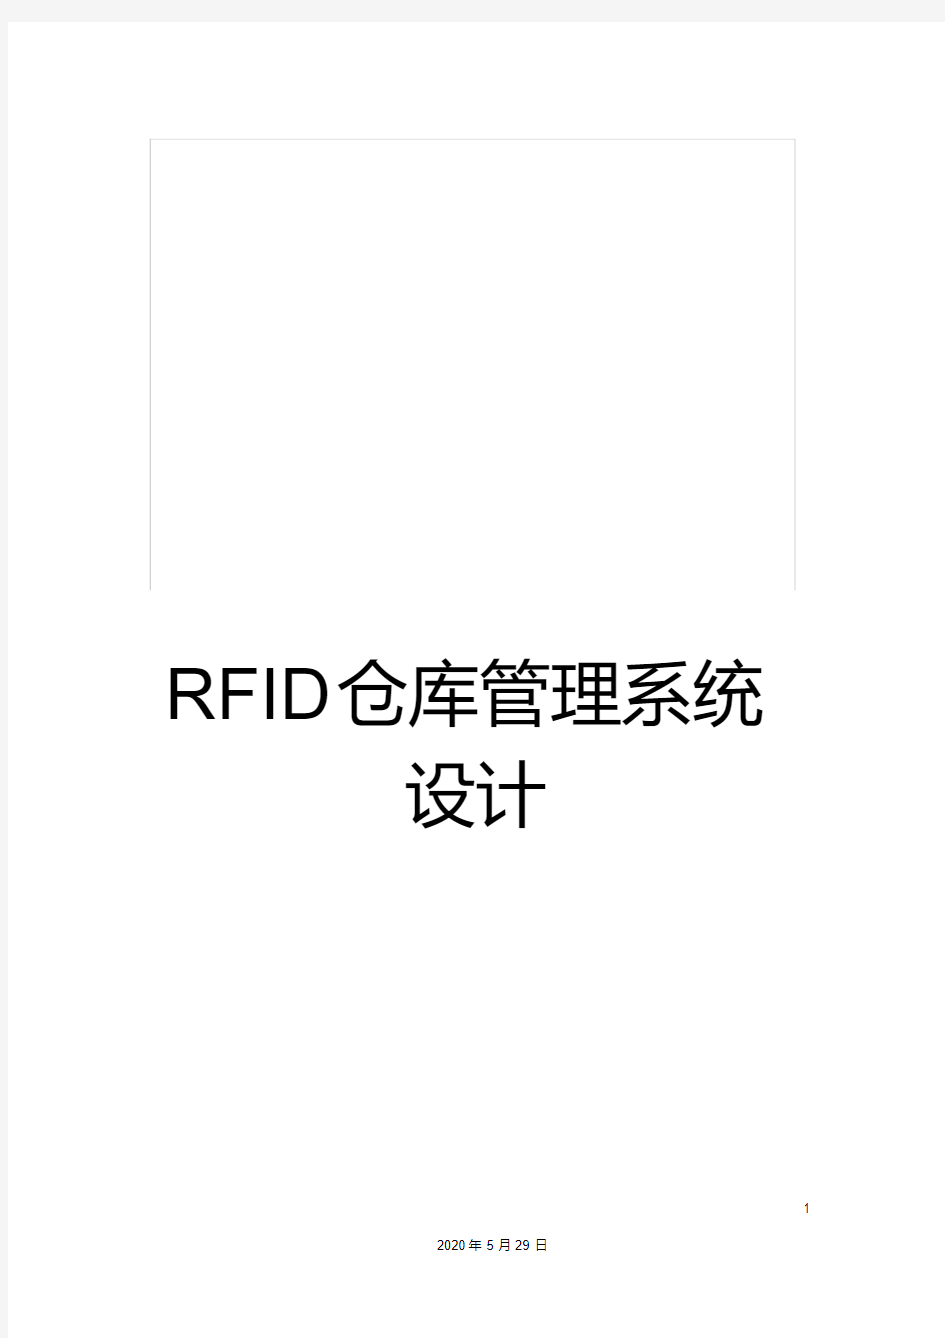 RFID仓库管理系统设计